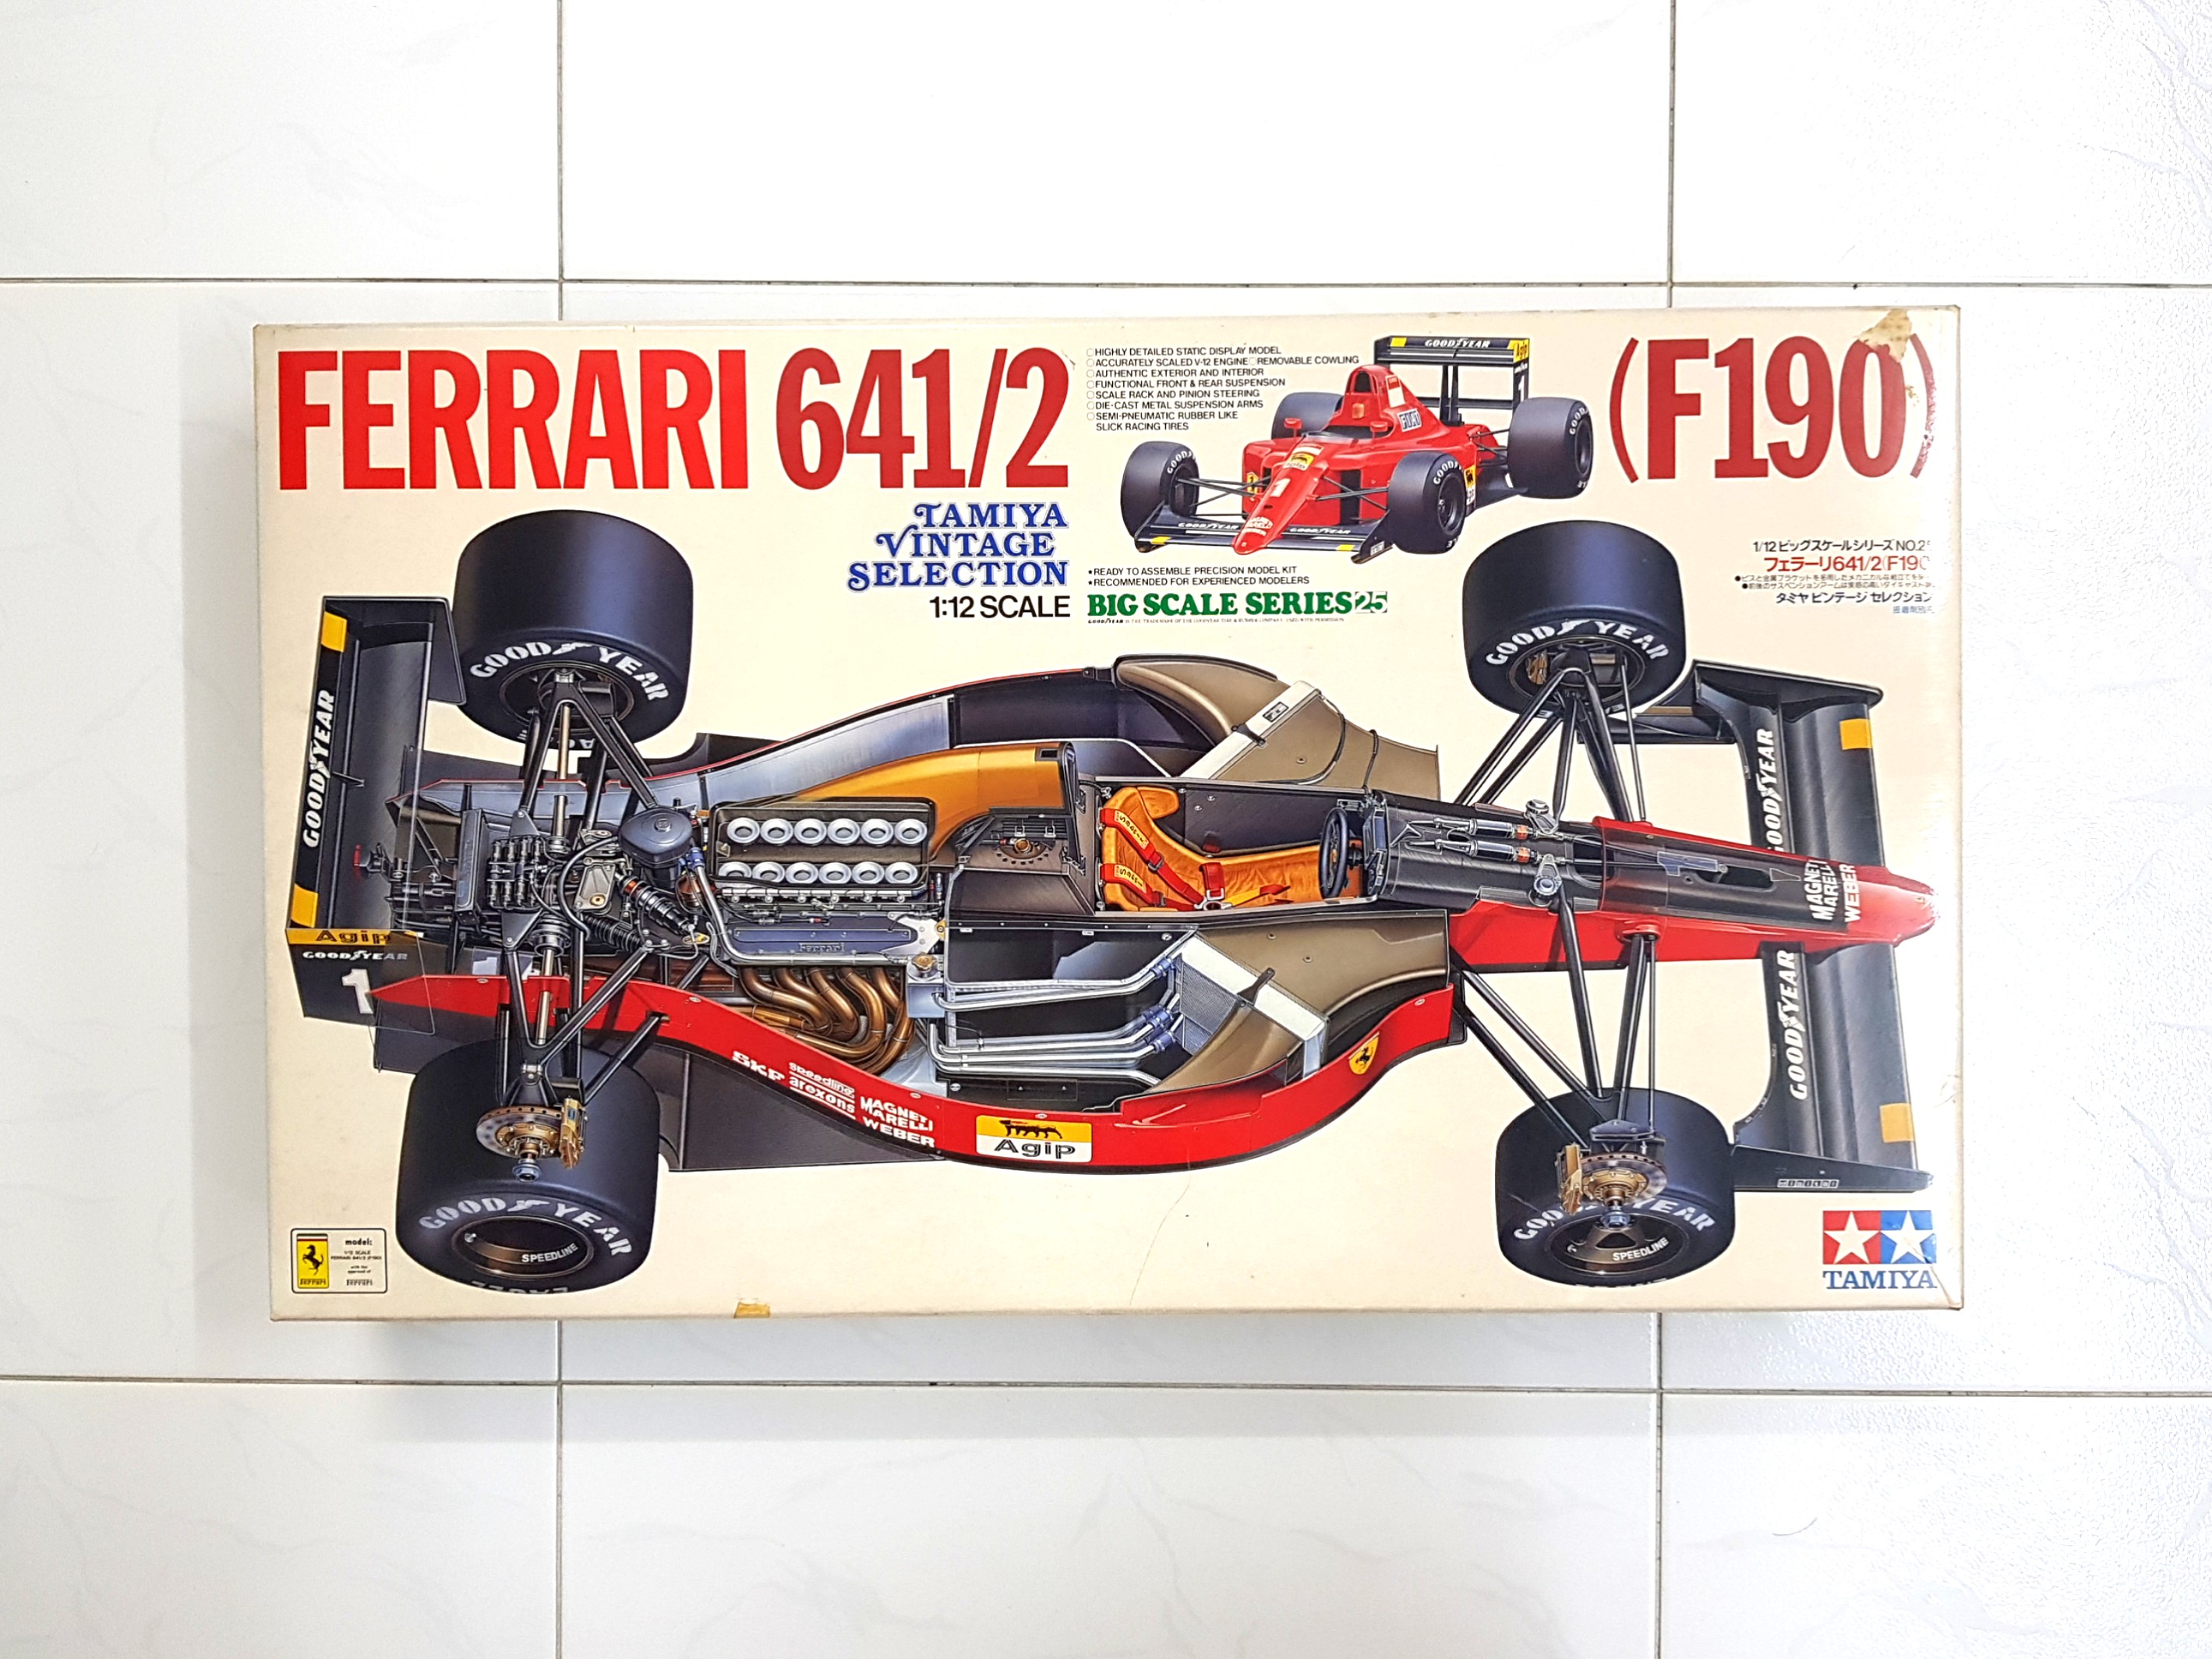 Tamiya 12027 Ferrari 641/2 F190 Model Kit 1/12 Scale F1 Formula Big for sale online 